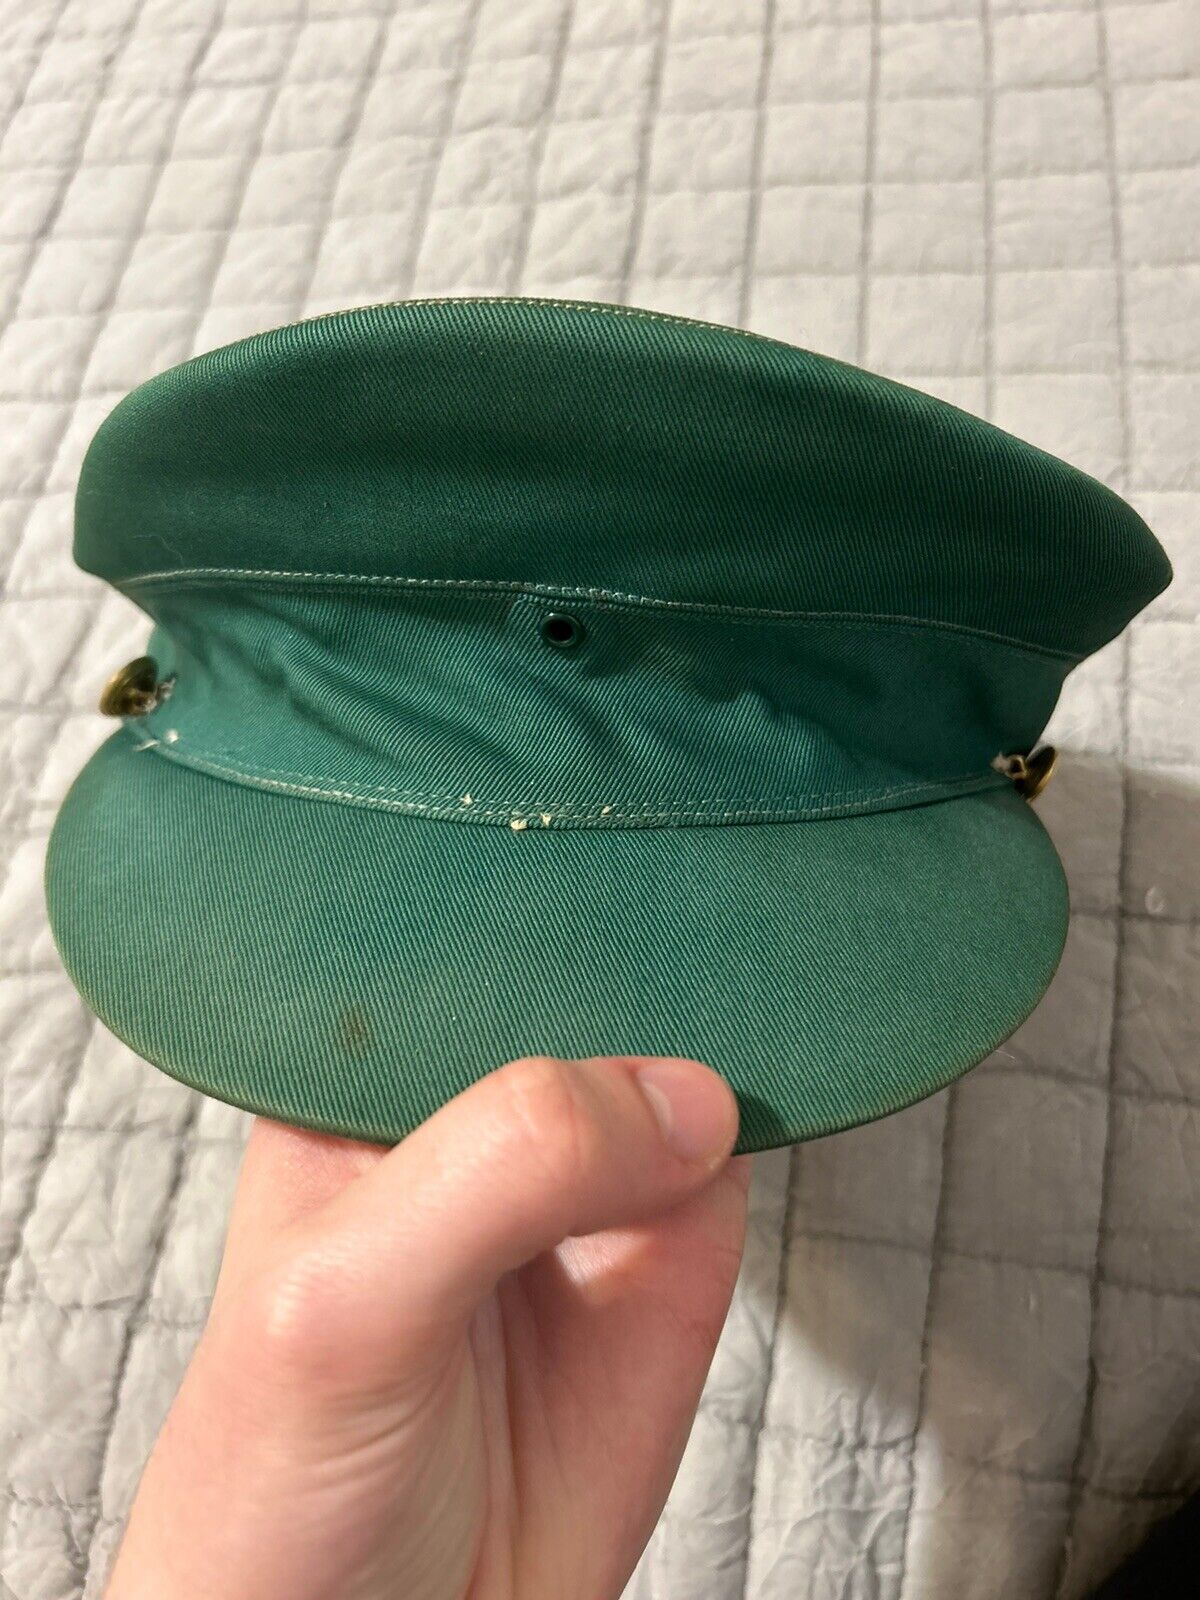 WWII USMCWR Women’s Reserve summer uniform hat